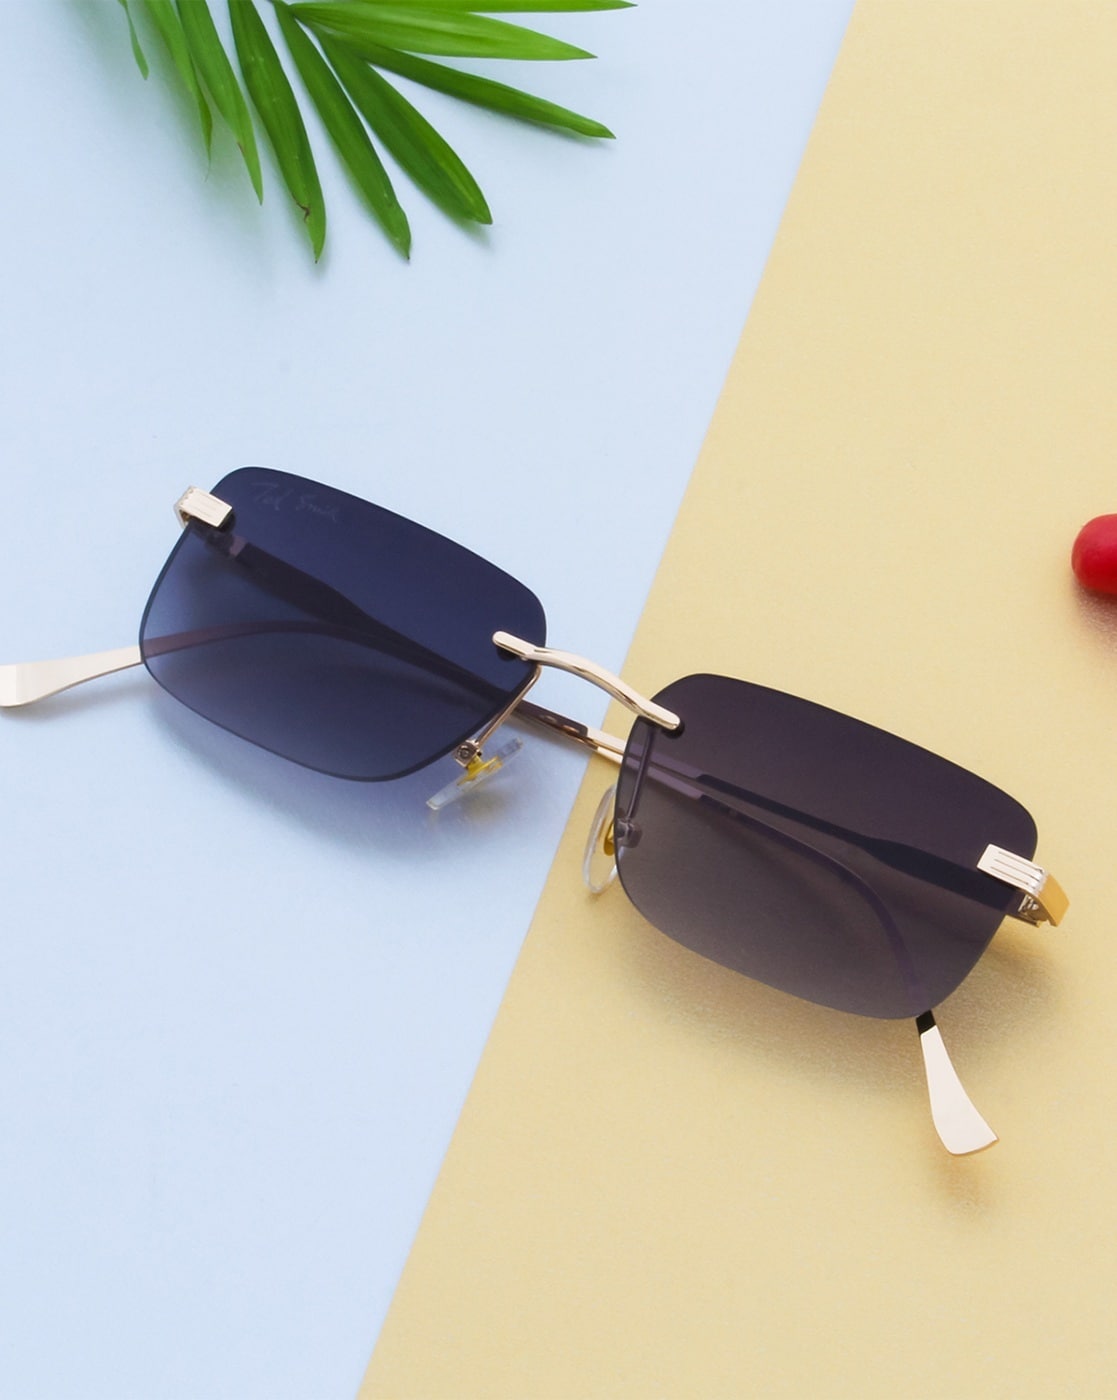 Enjoy 147+ new model sunglasses latest